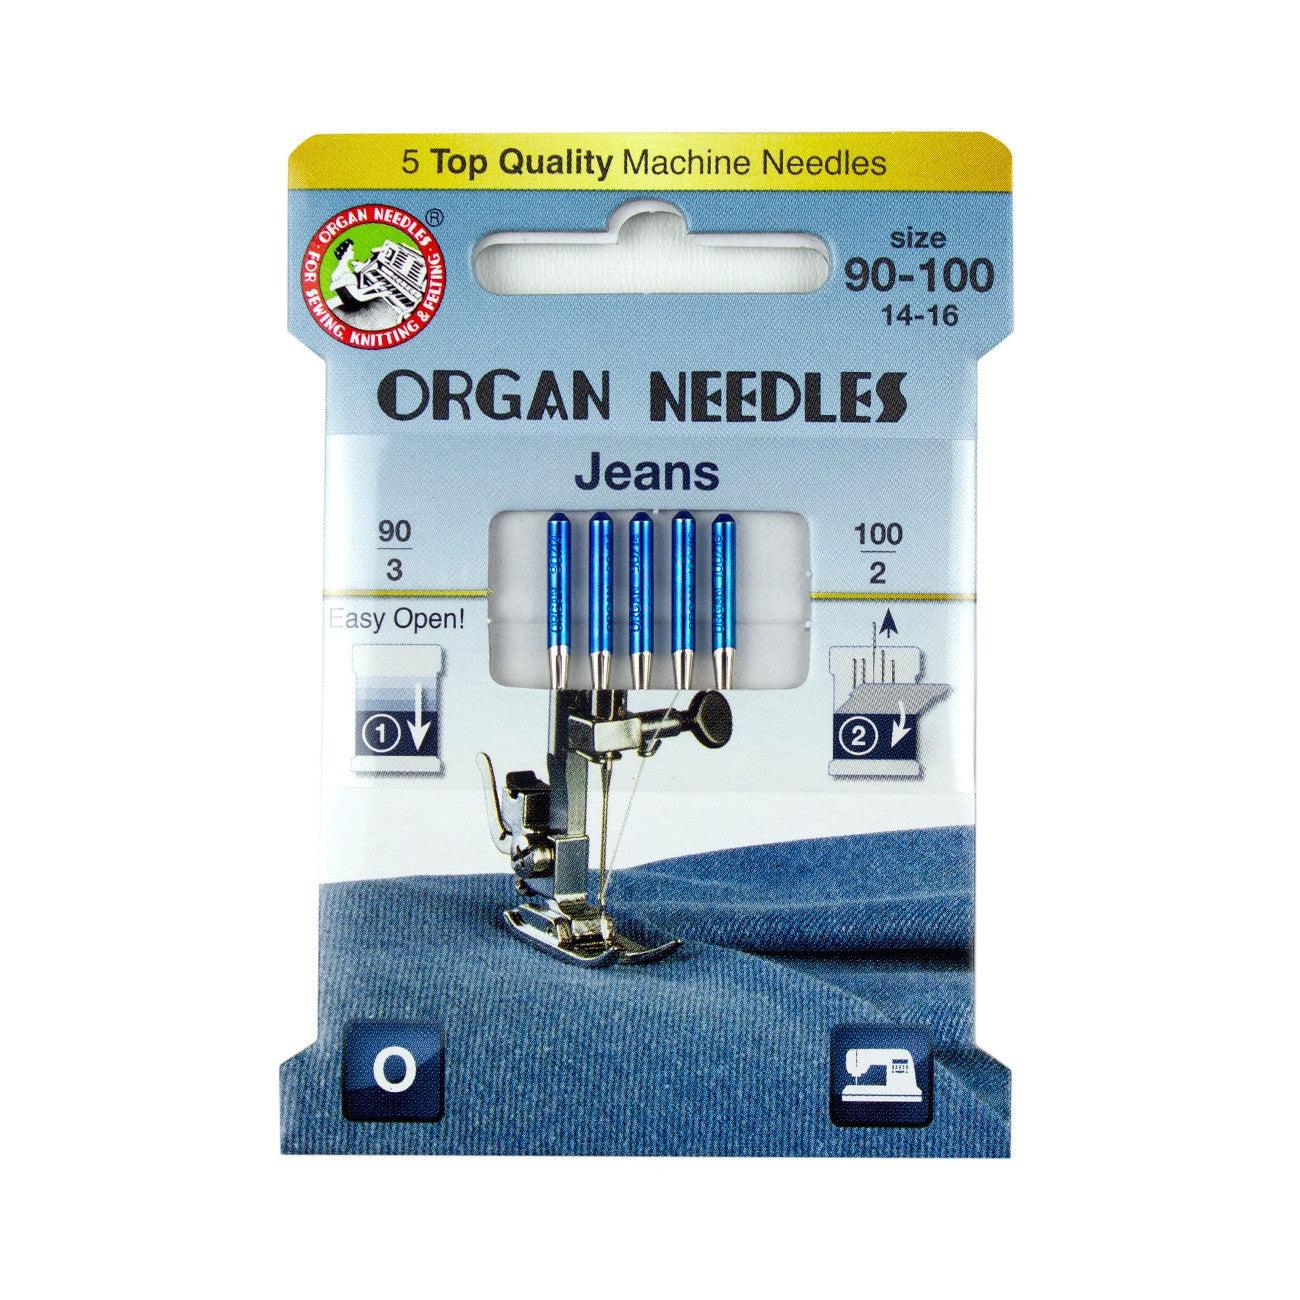 Organ Needles Jeans Assortment 90-100 Eco Pack-Organ Needles-My Favorite Quilt Store